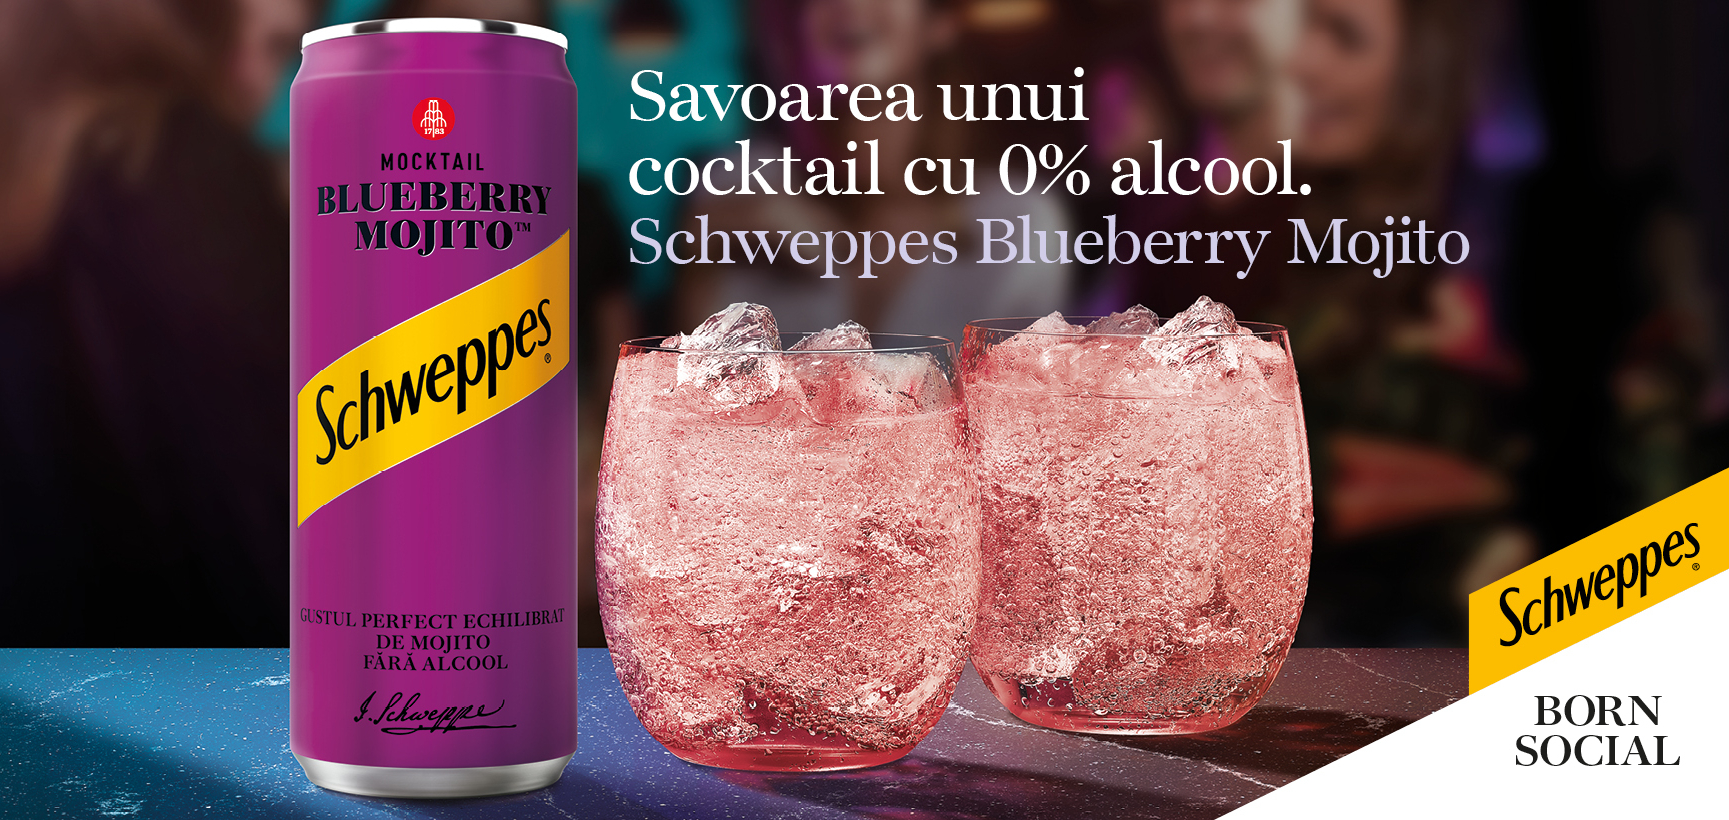 Savoarea unui cocktail cu 0% alcool. Schweppes Blueberry Mojito